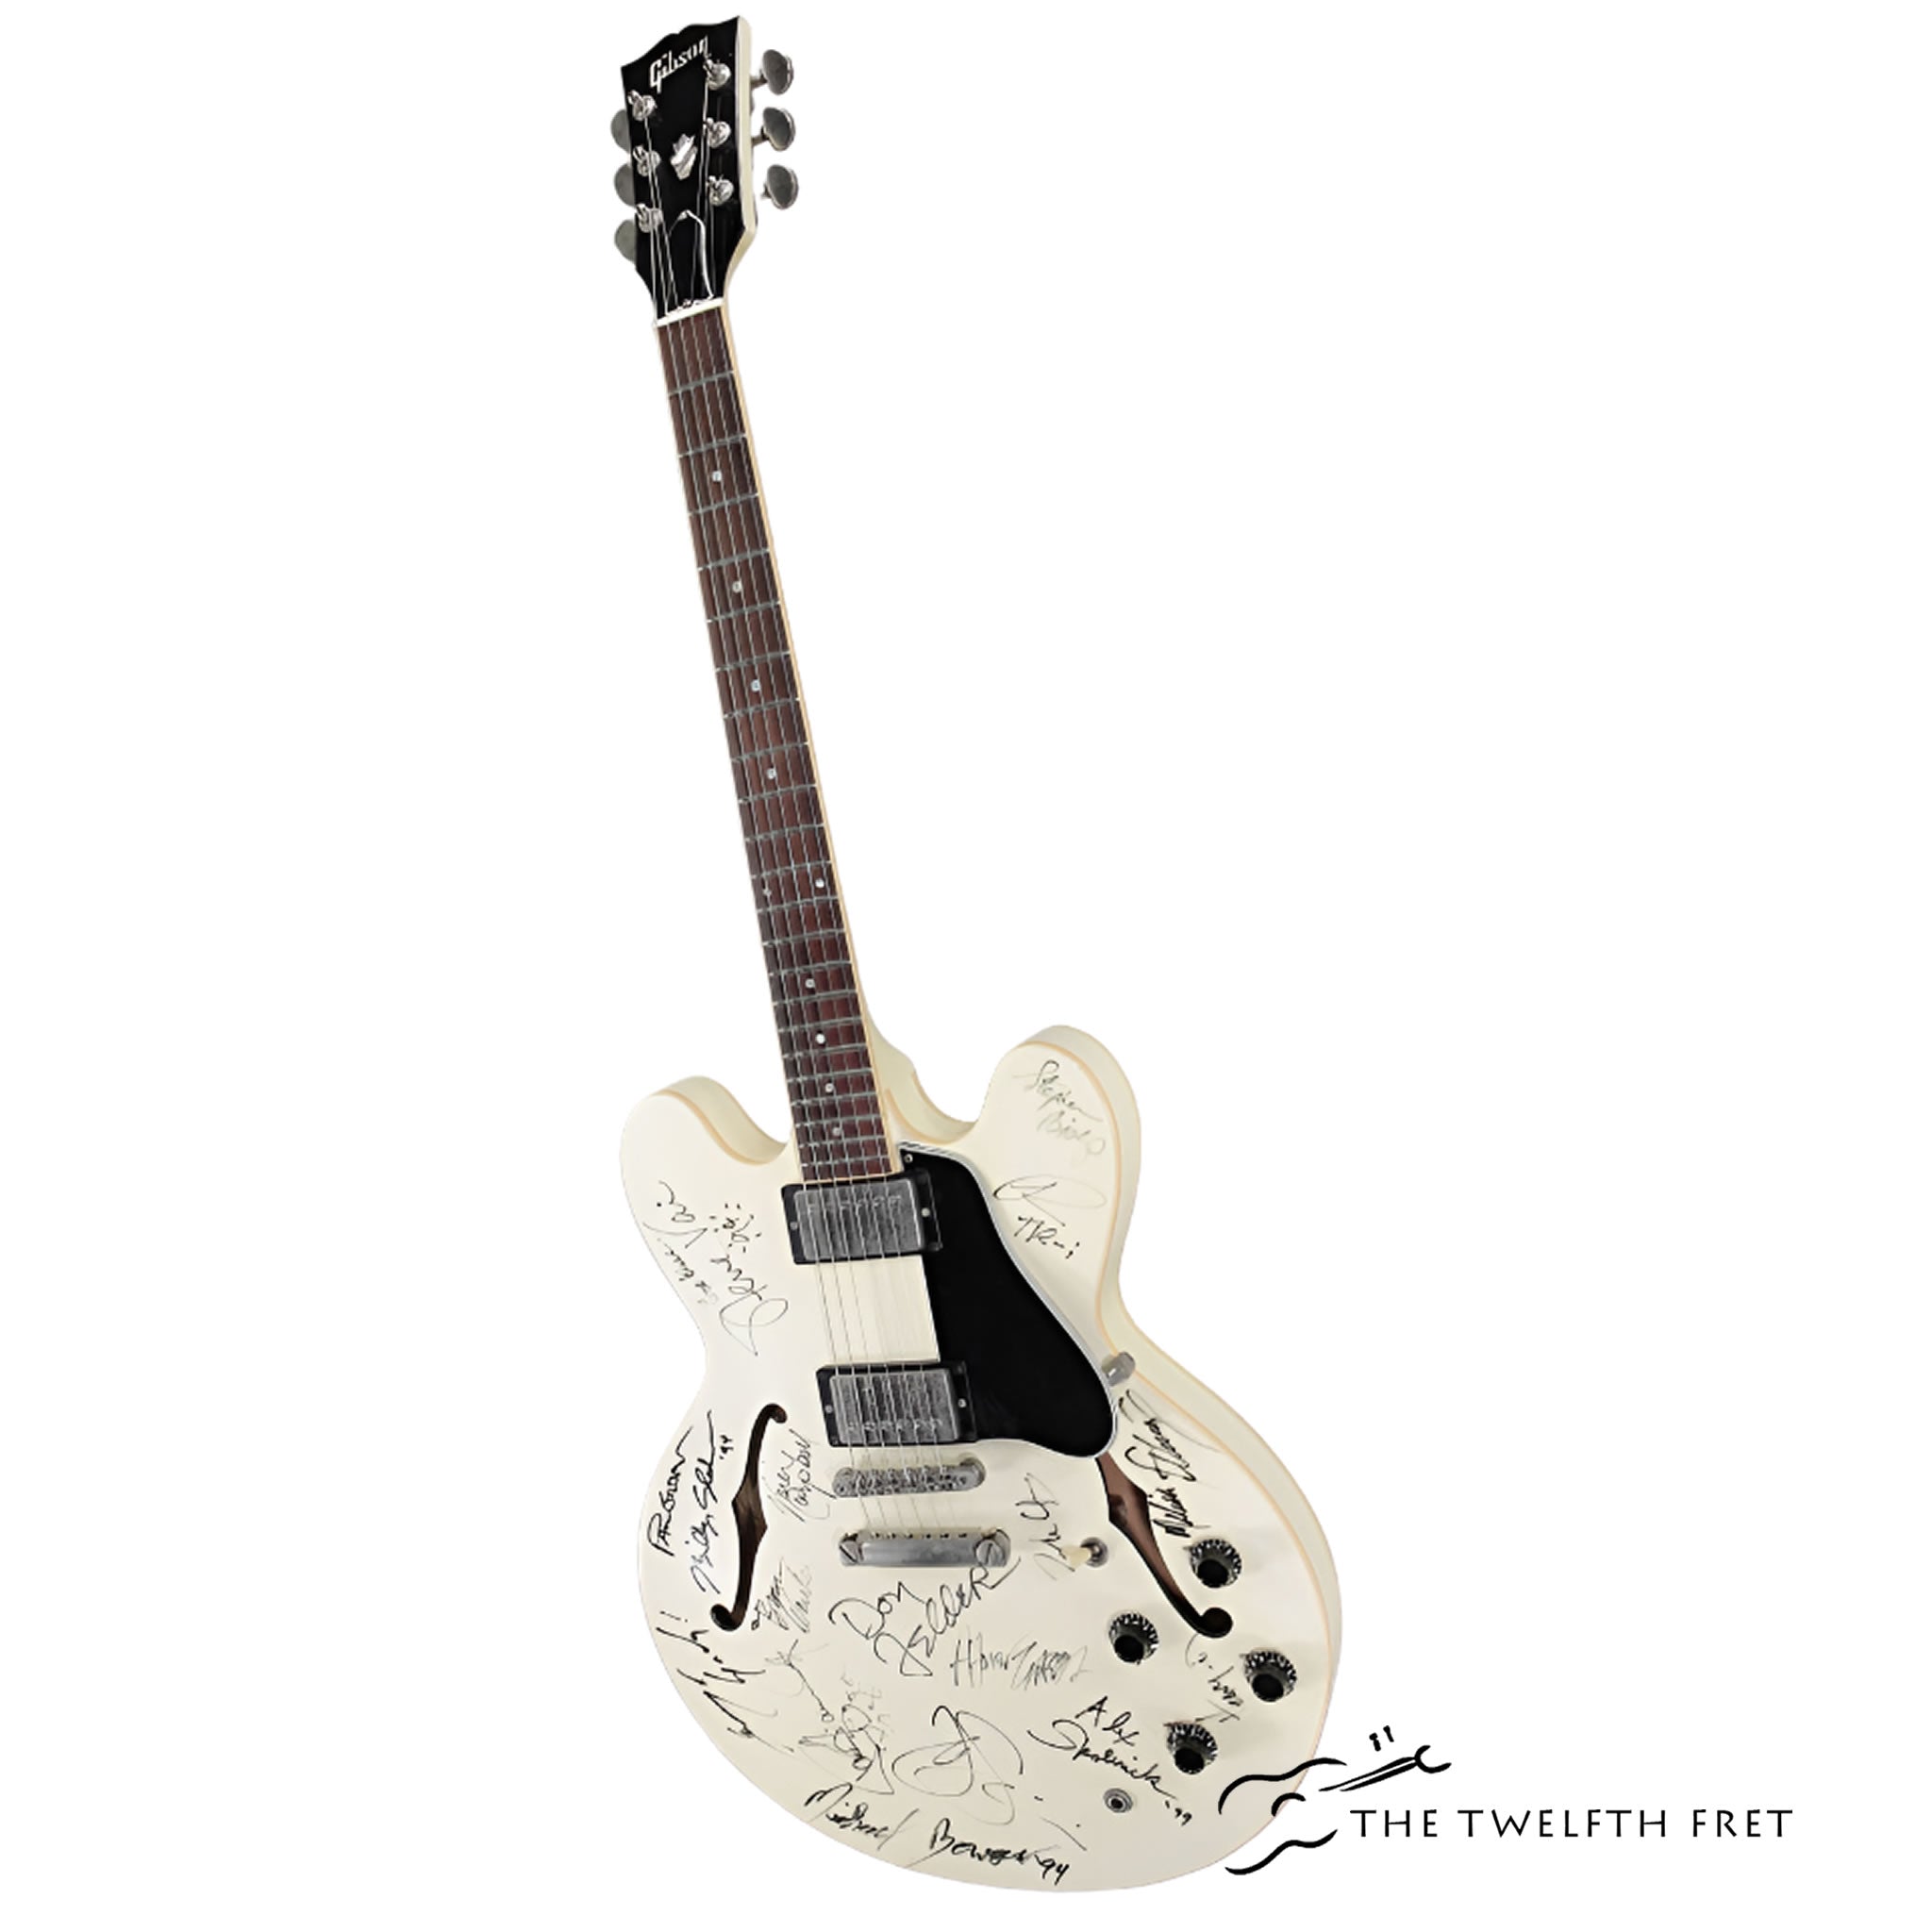 Autographed Gibson ES-335 Dot Alpine White, 1991 - The Twelfth Fret